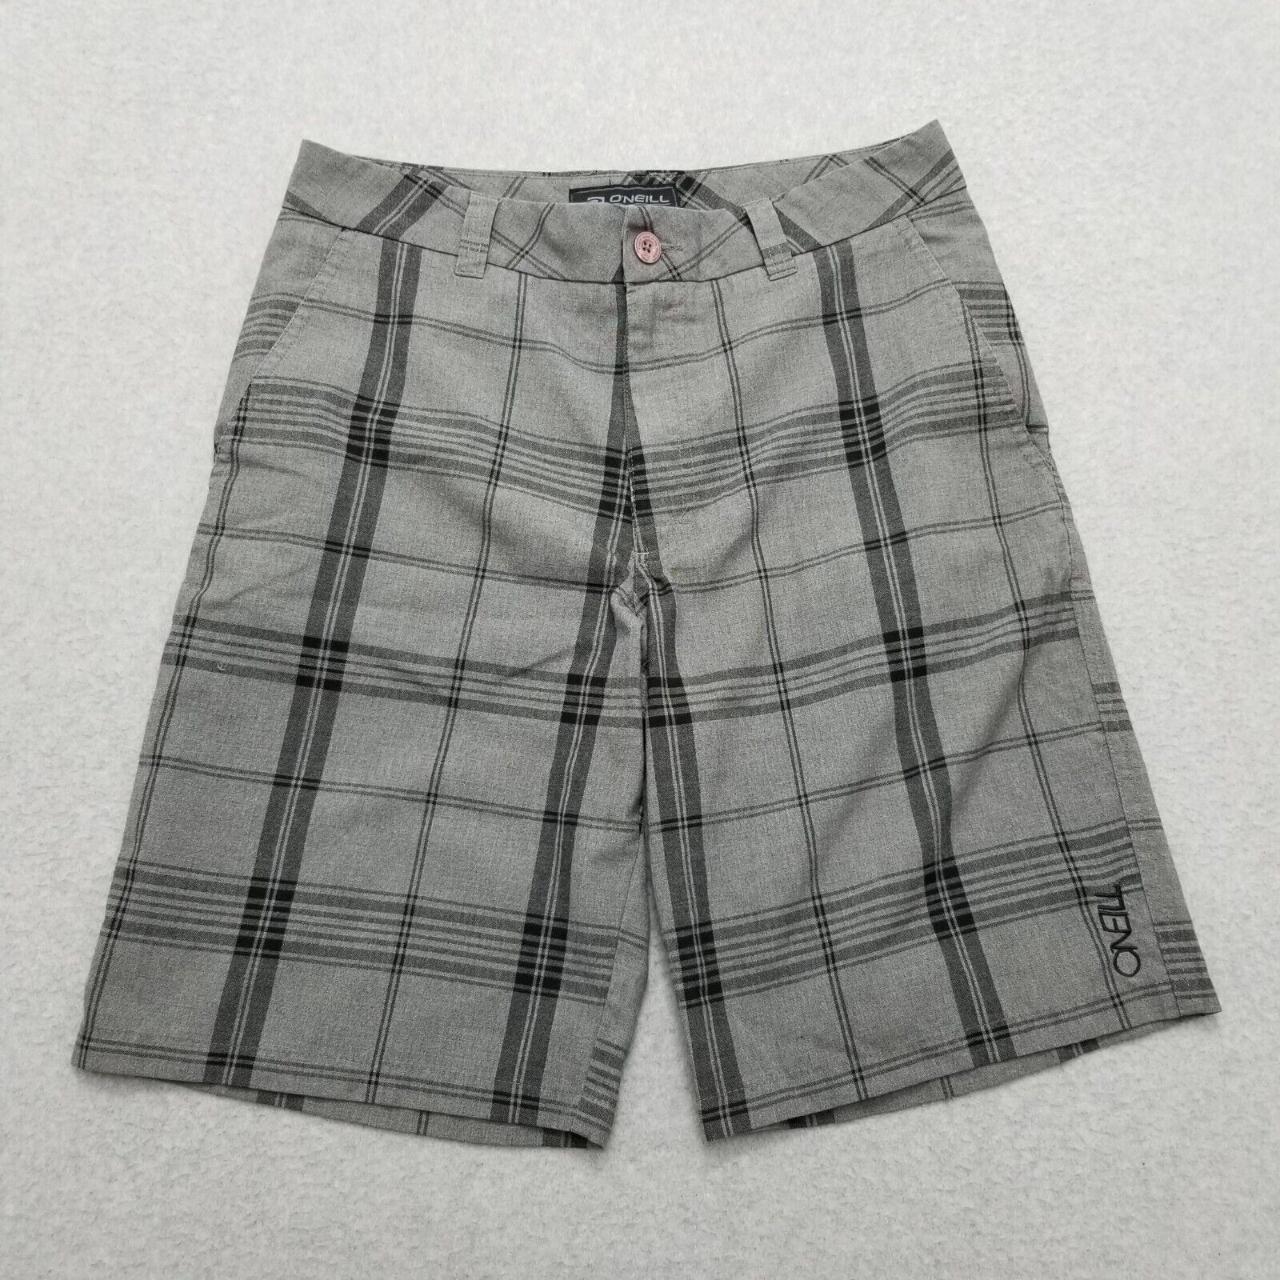 Oneill Shorts Mens 30 Gray Plaid Chino Pockets... - Depop